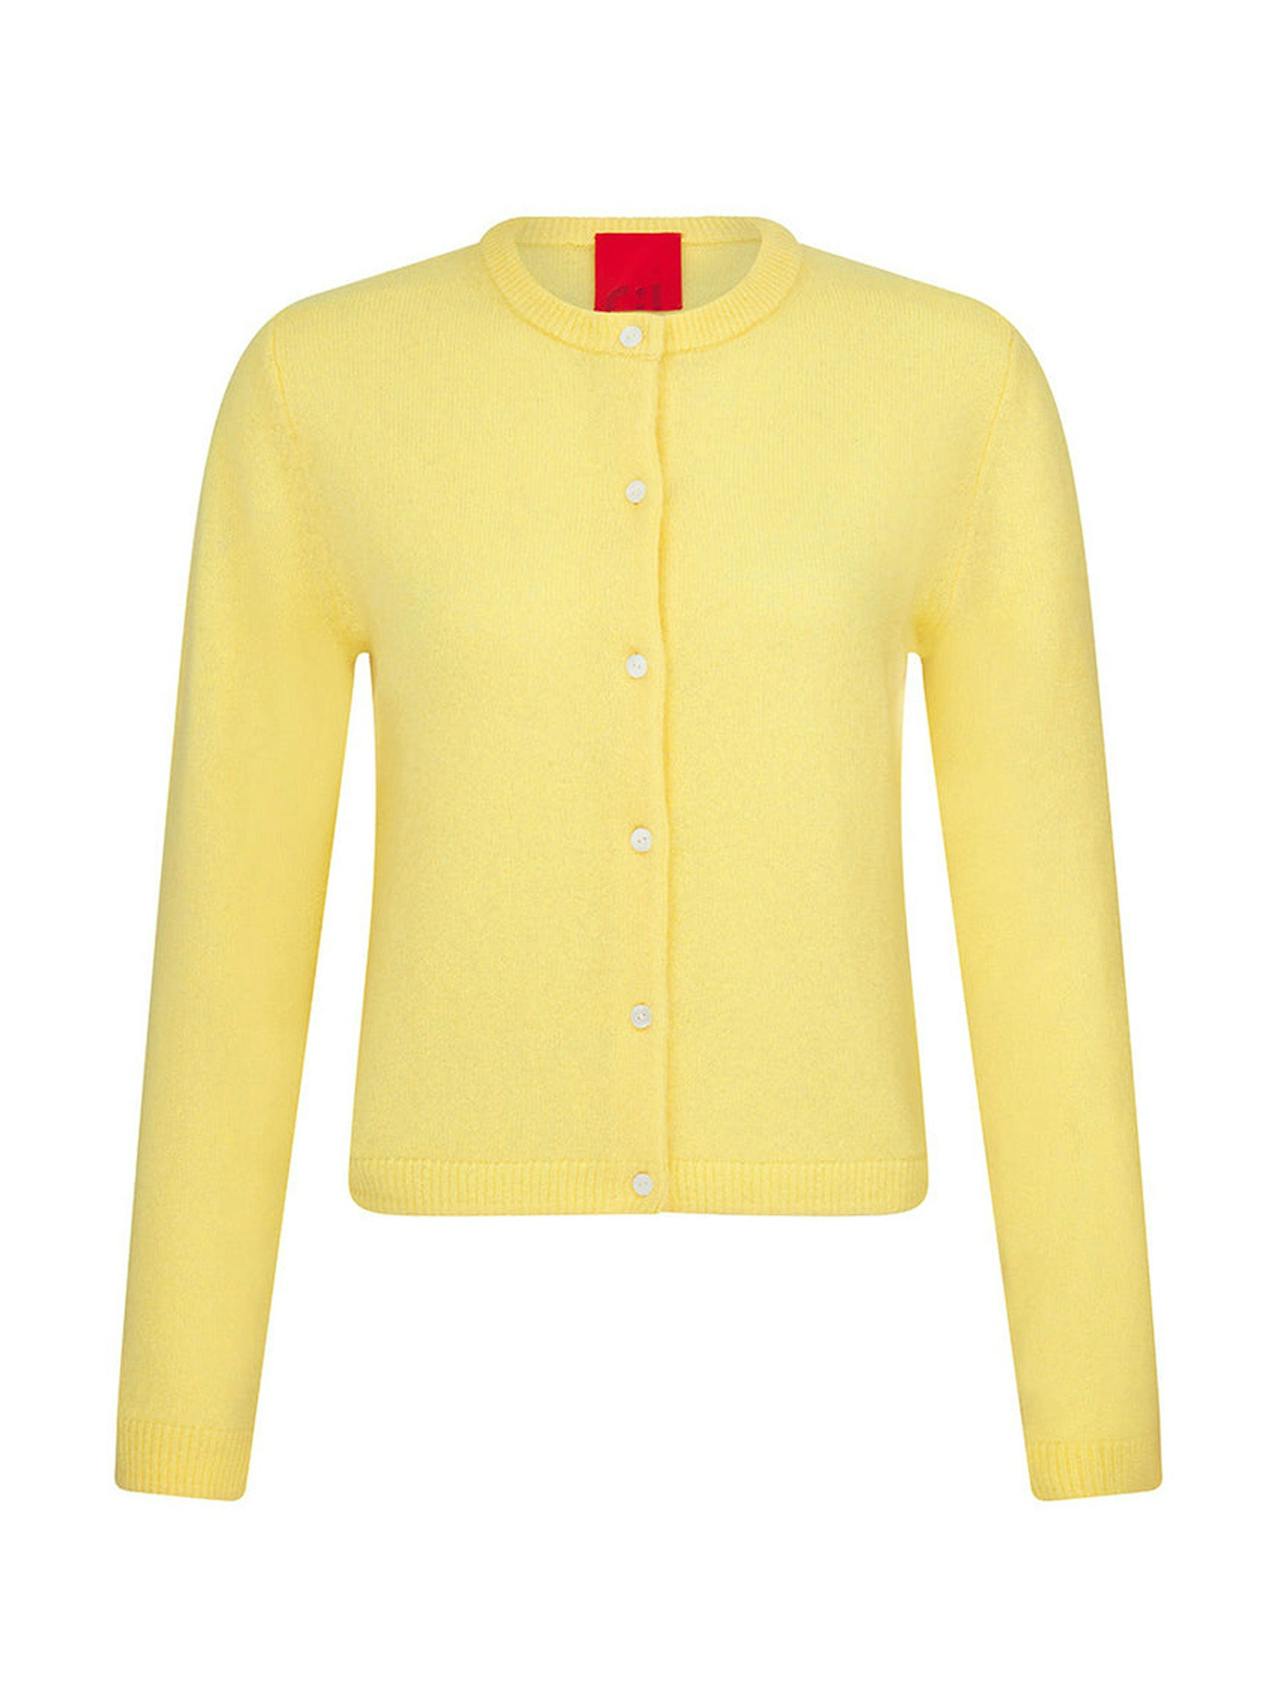 Yellow cashmere cardigan